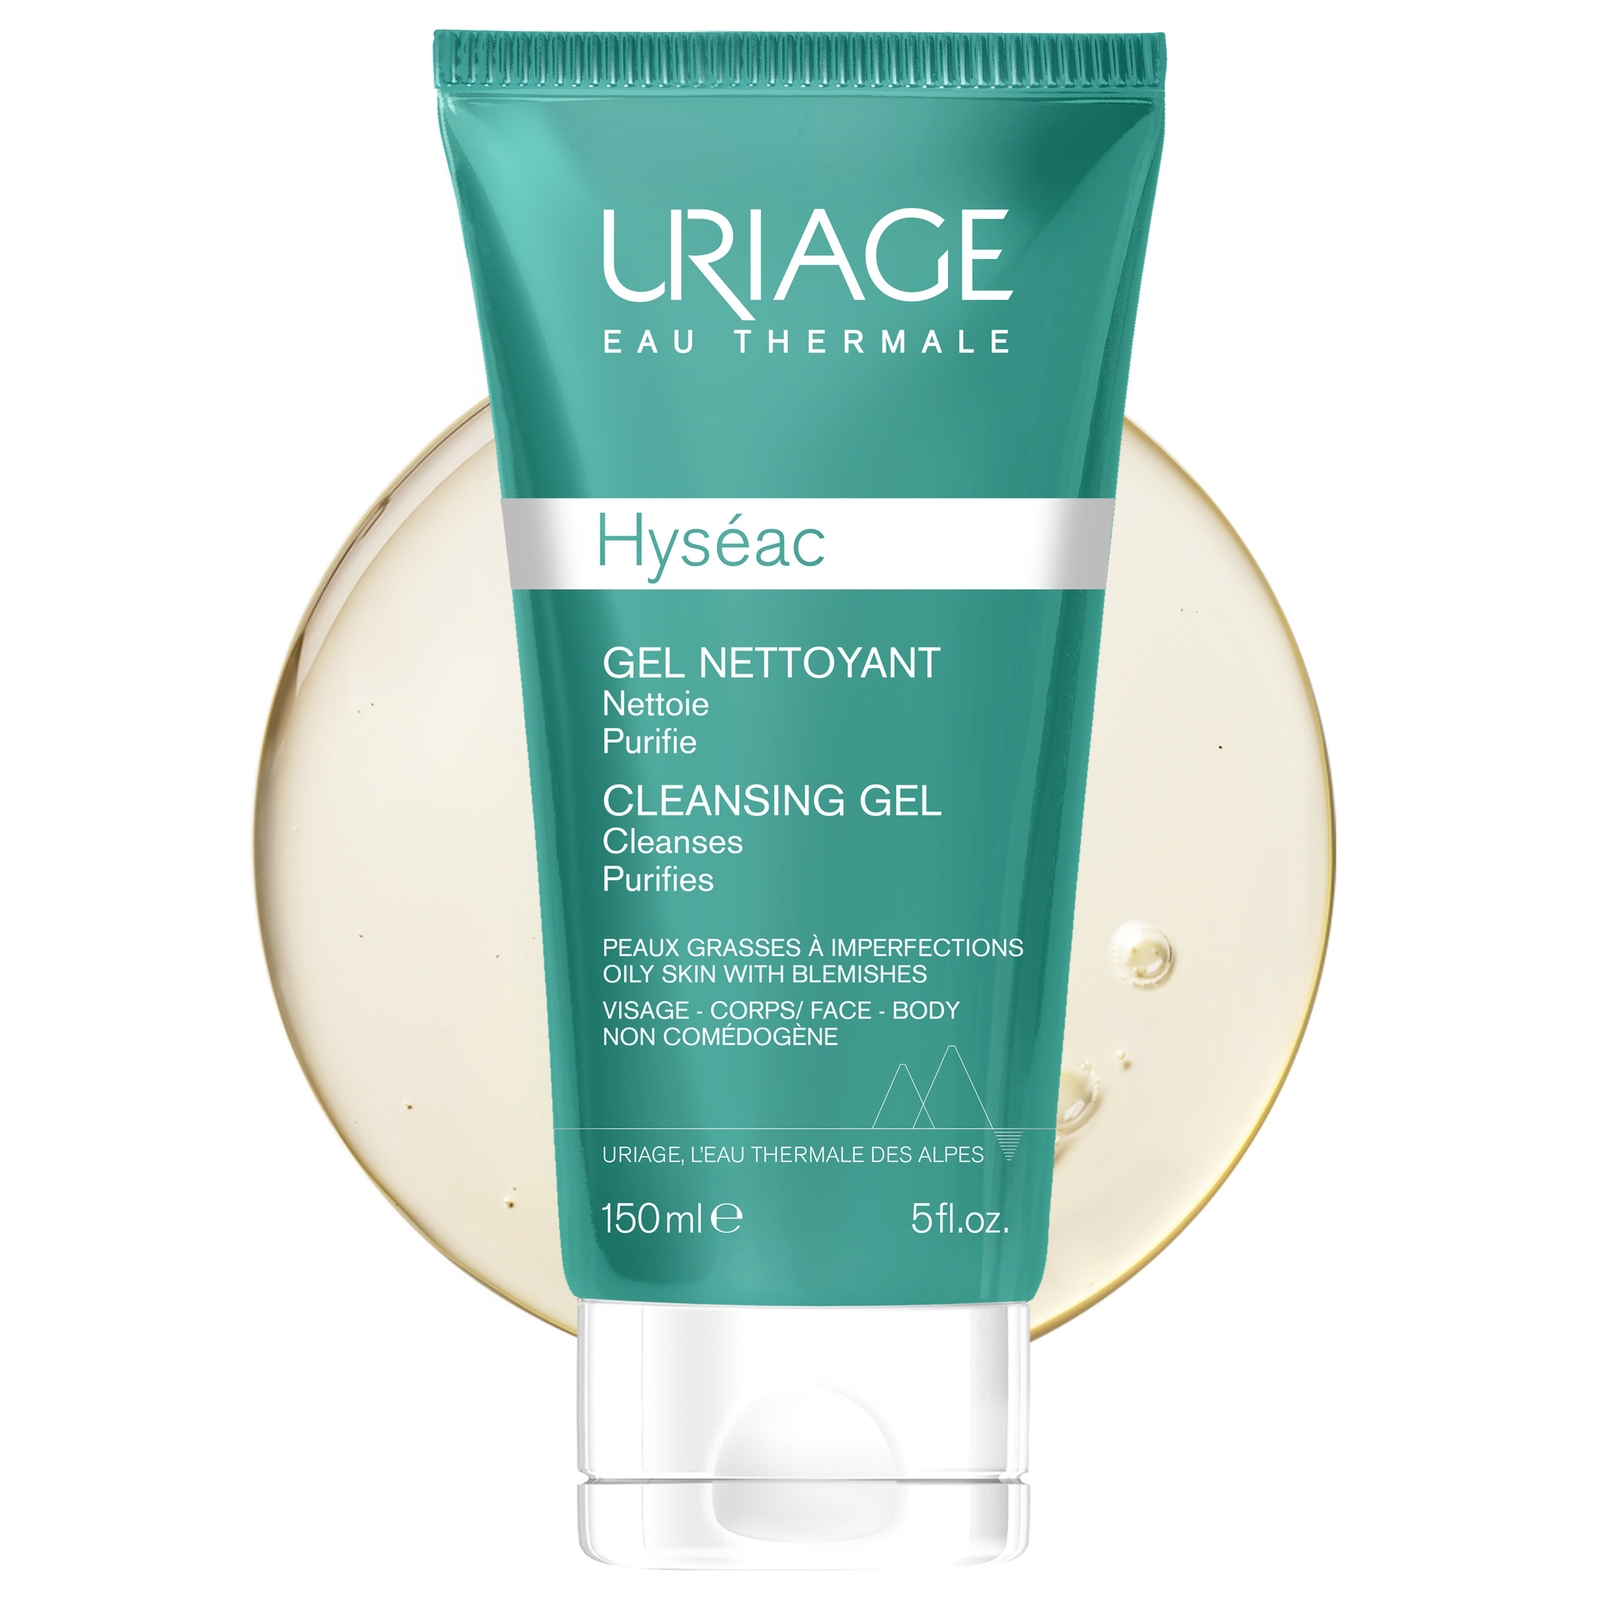 Image of URIAGE Hyseac Cleansing Gel 5 fl.oz.